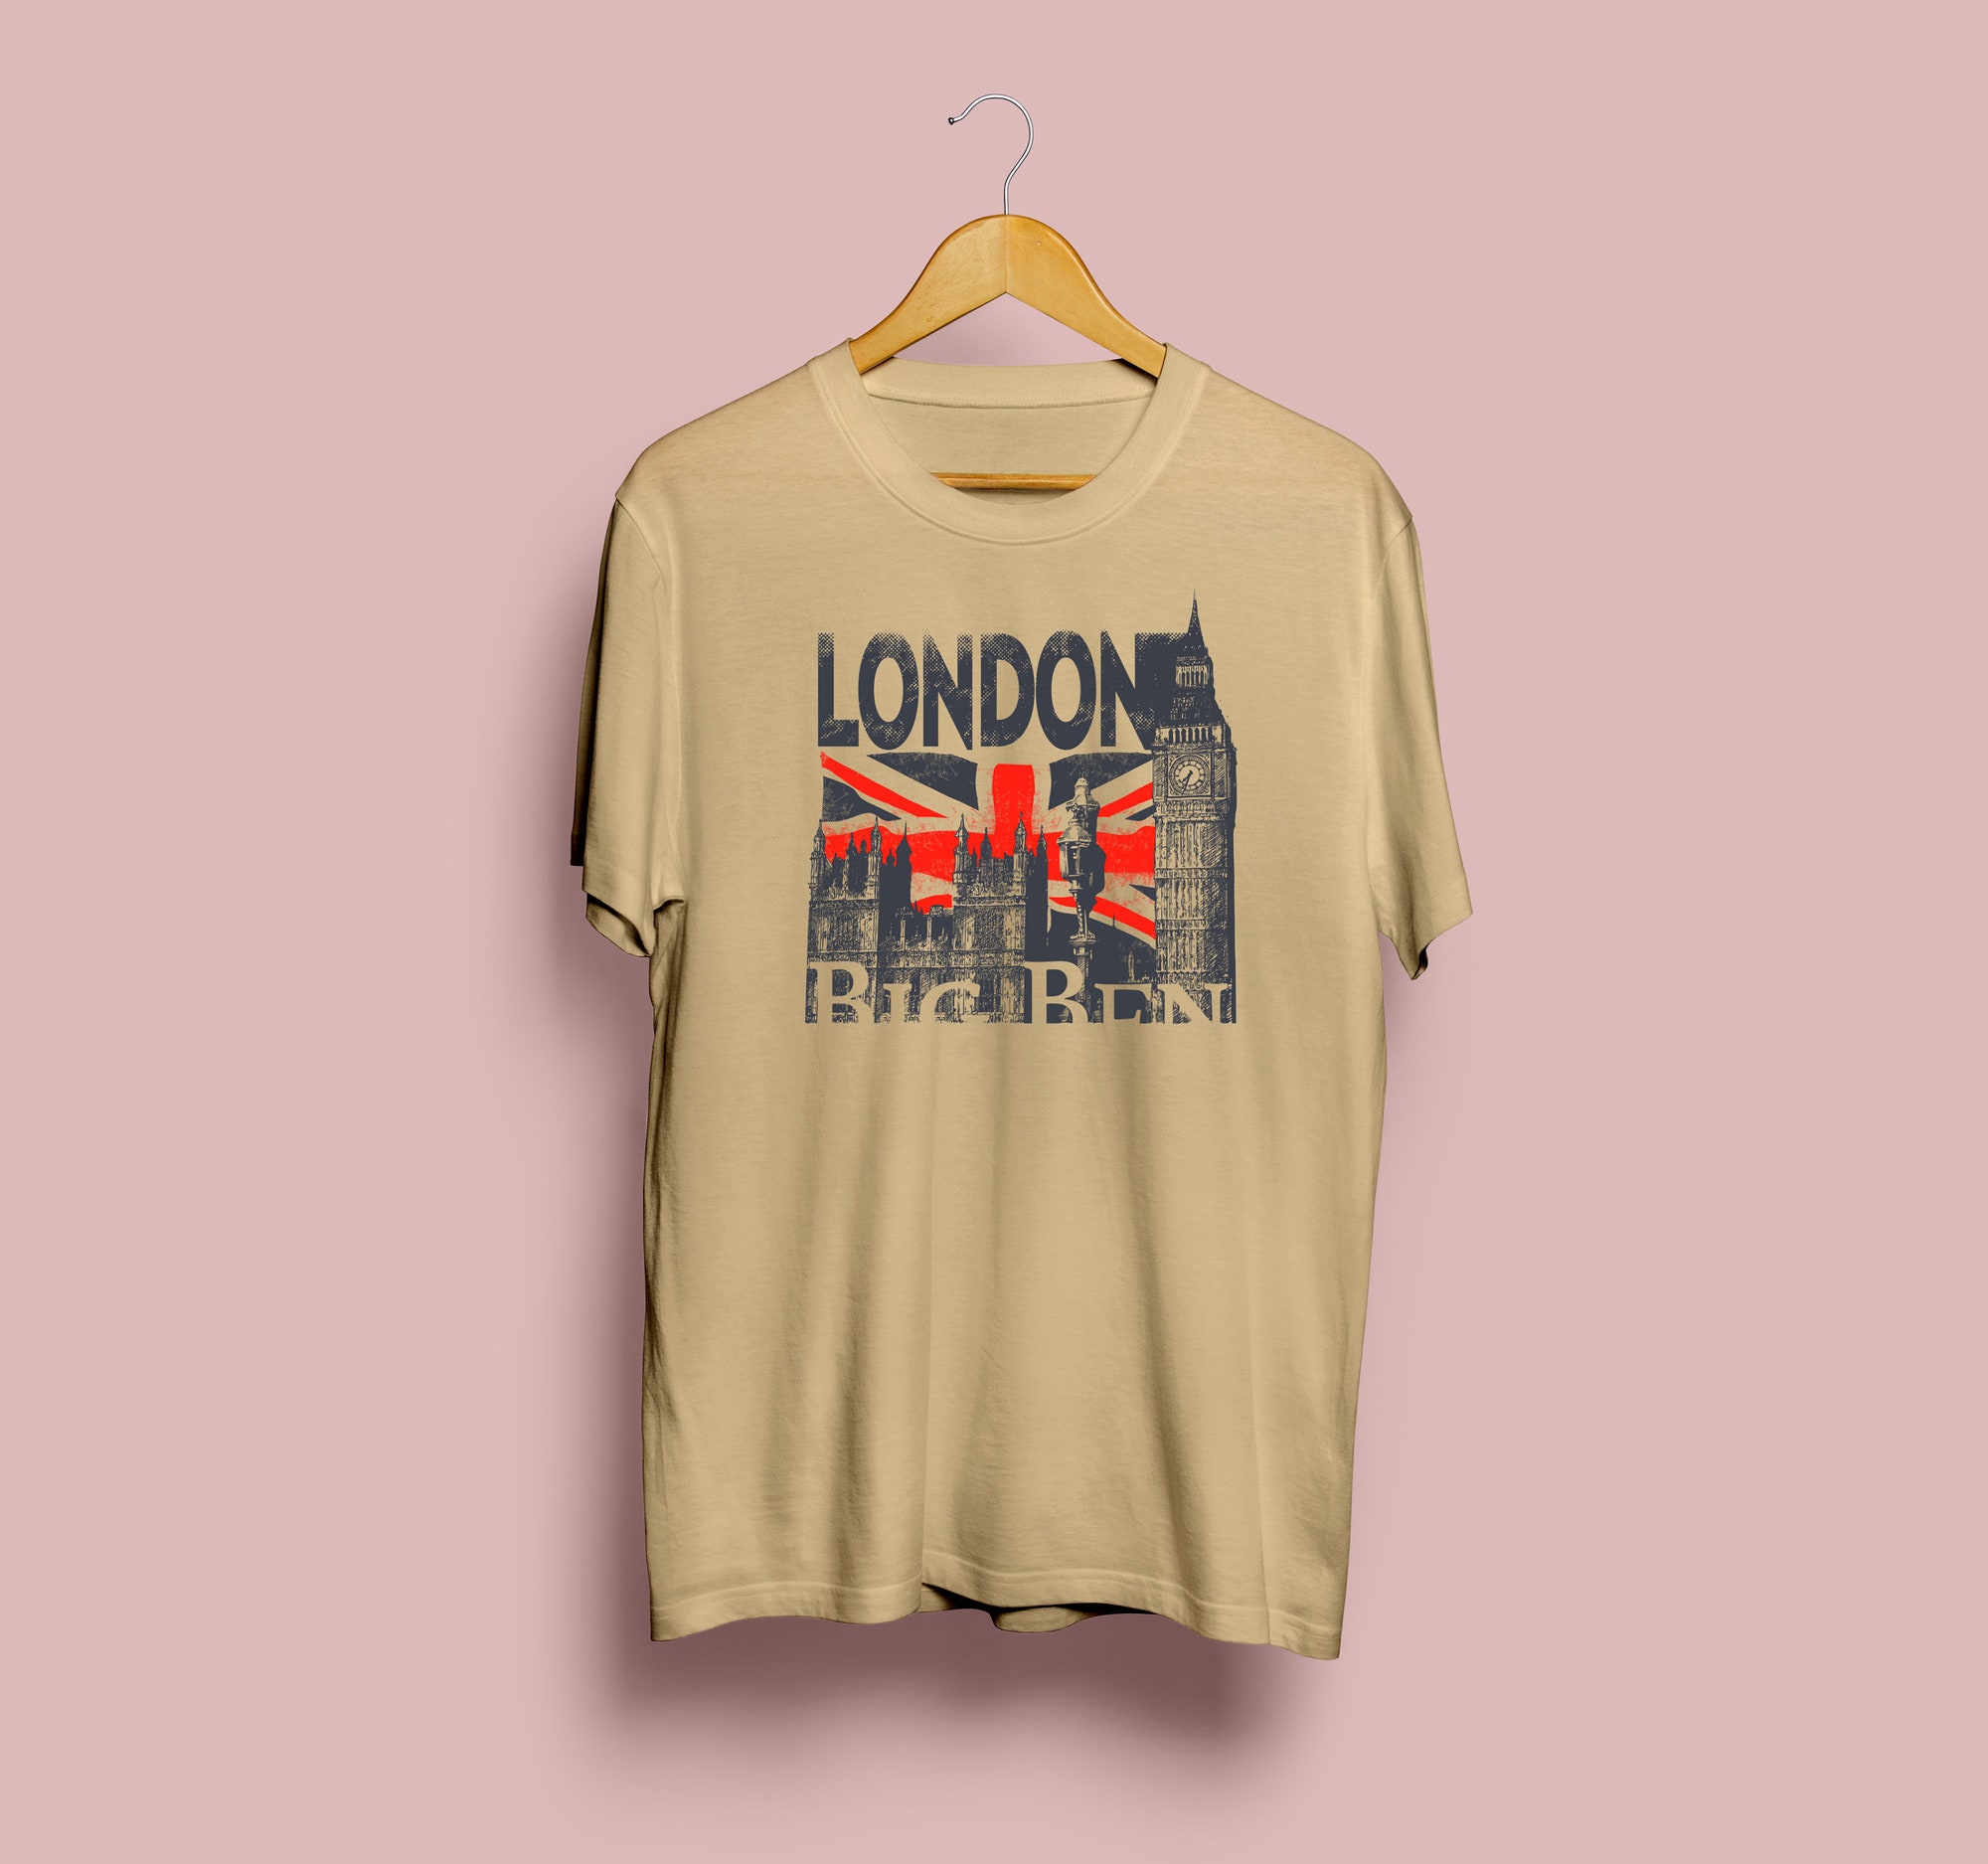 Discover London Shirt, London T-Shirt, England London Shirt